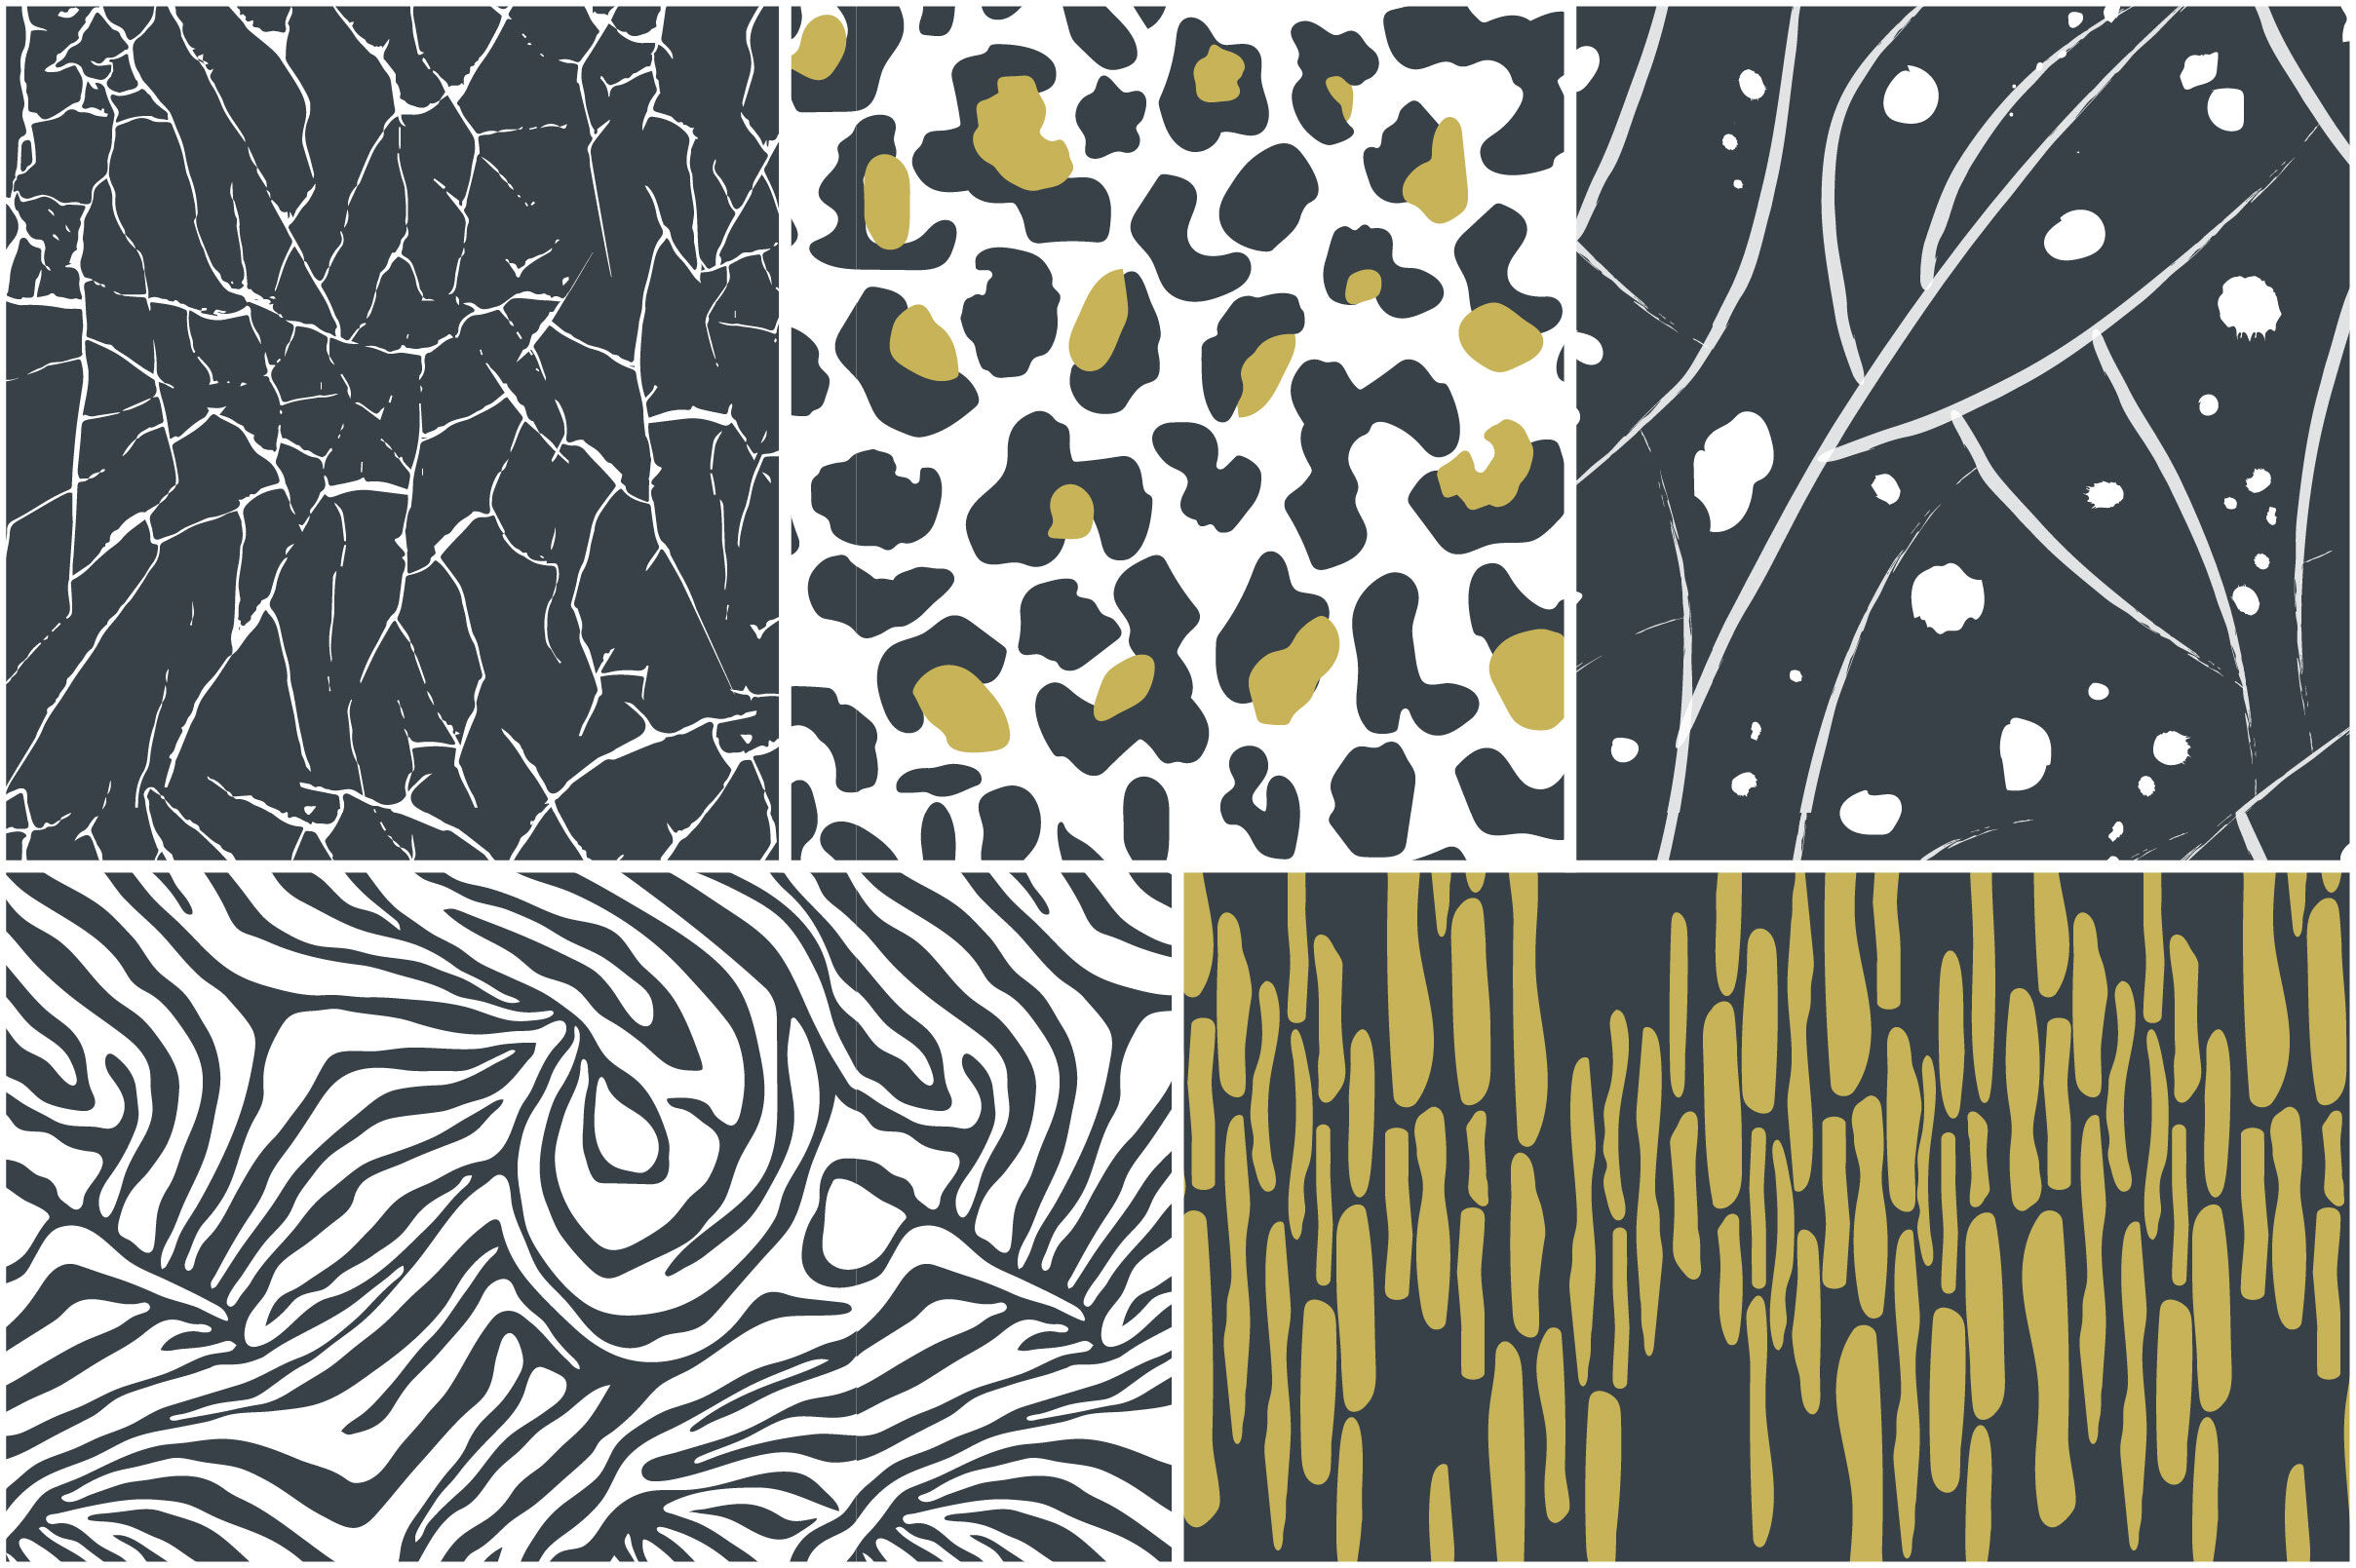 Animal print leopard pattern design wild seamless patterns